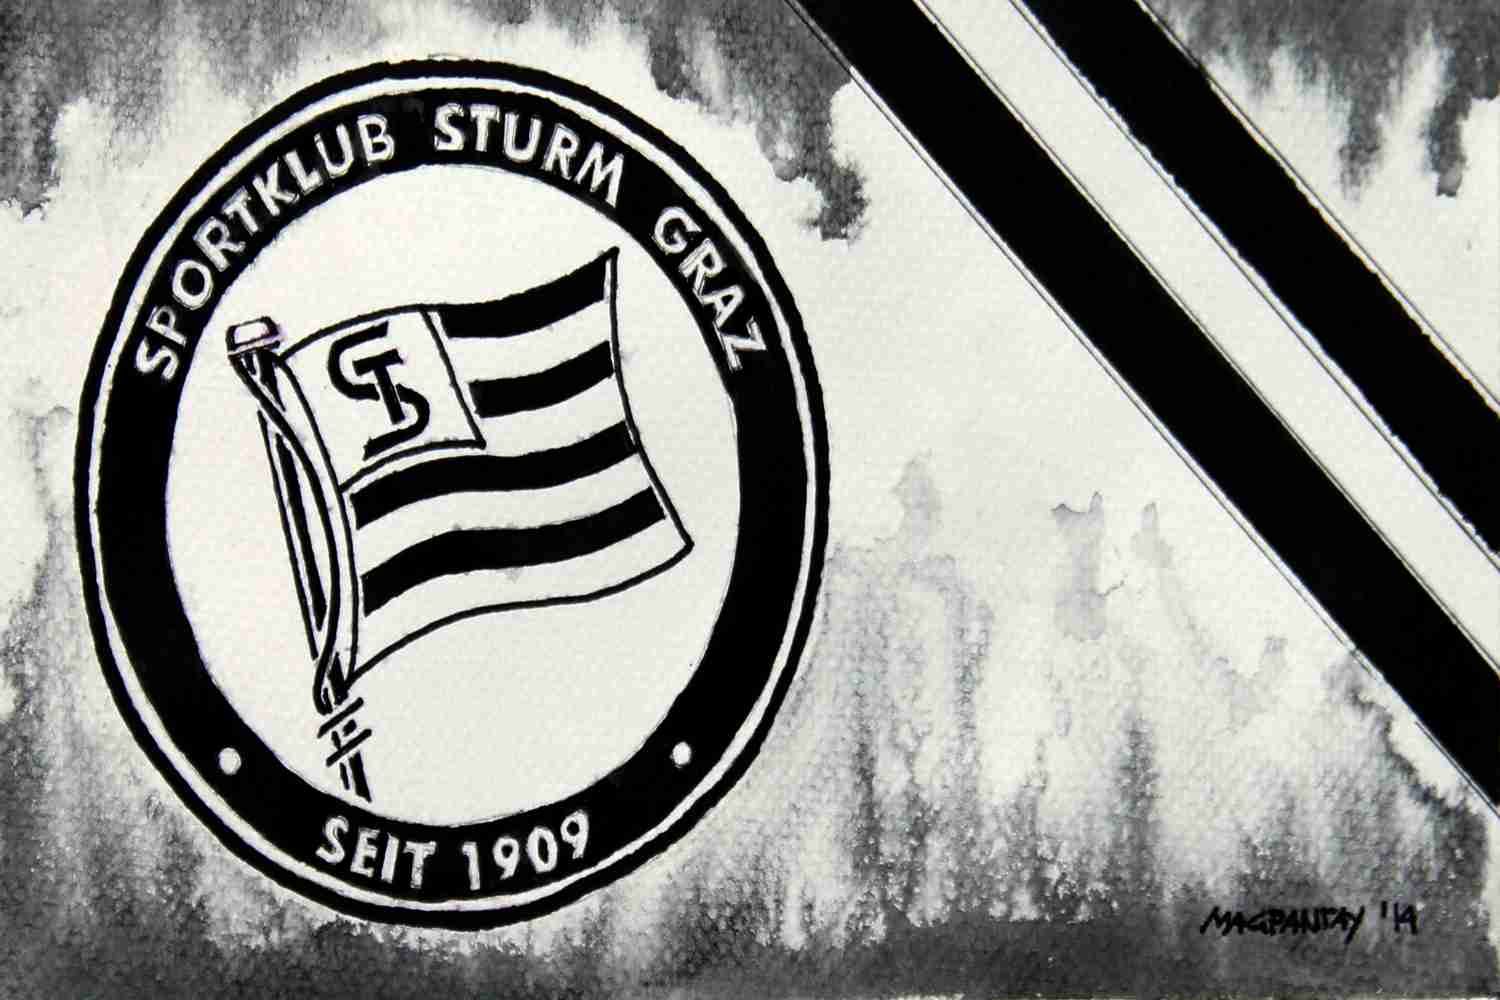 _SK Sturm Graz - Wappen mit Farben60x40cm